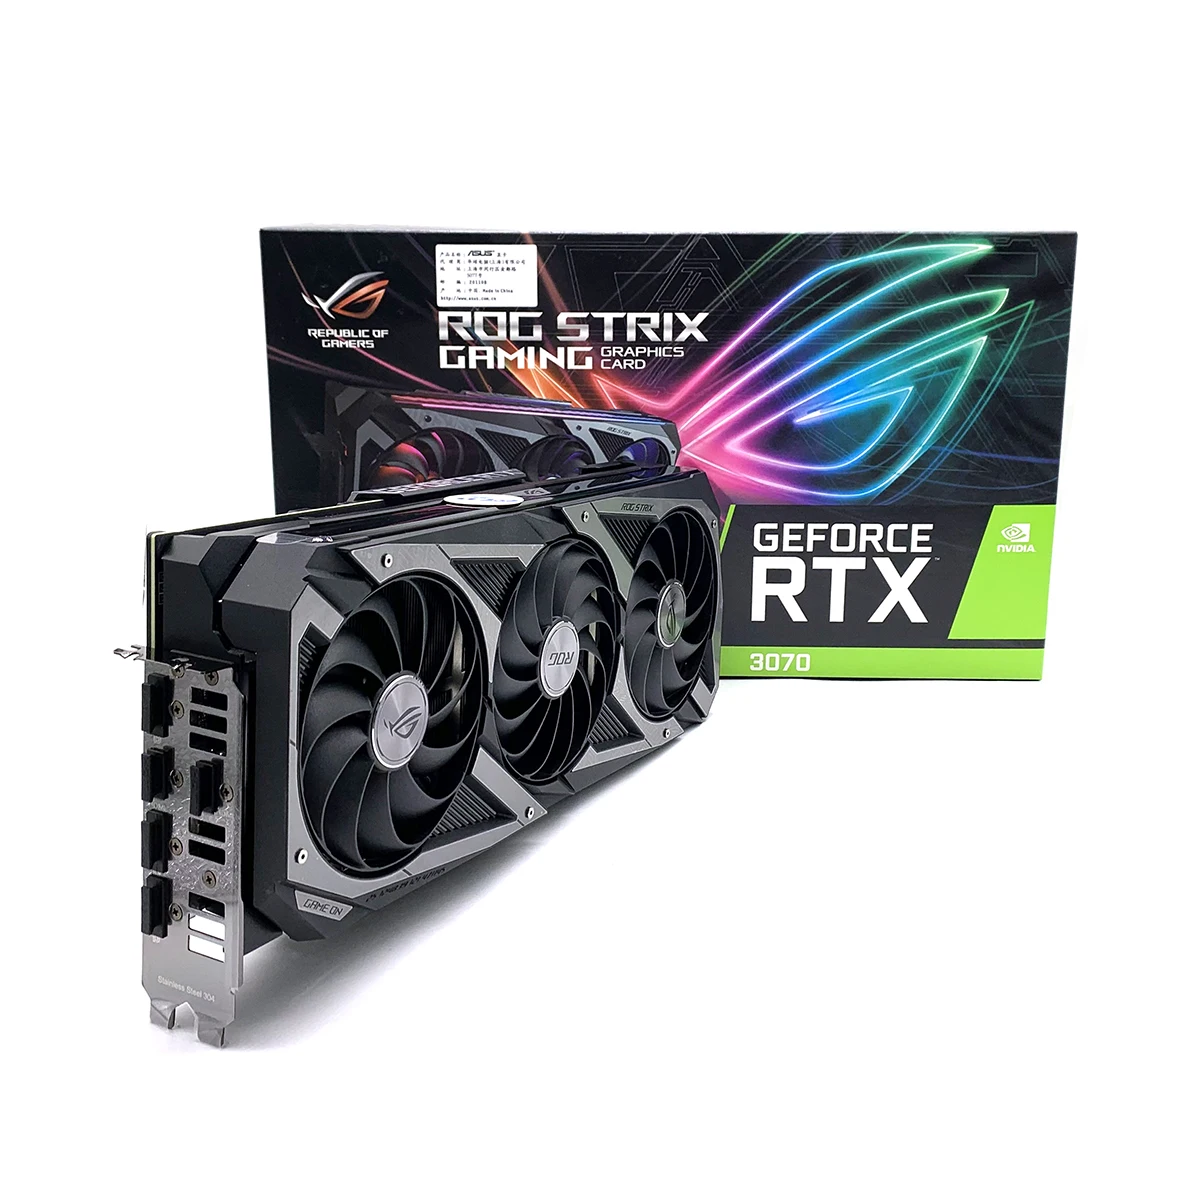 

RTX 3070 Non Lhr for Gaming GPU Card Graphics 8GB Memory Ausu Rog Strix